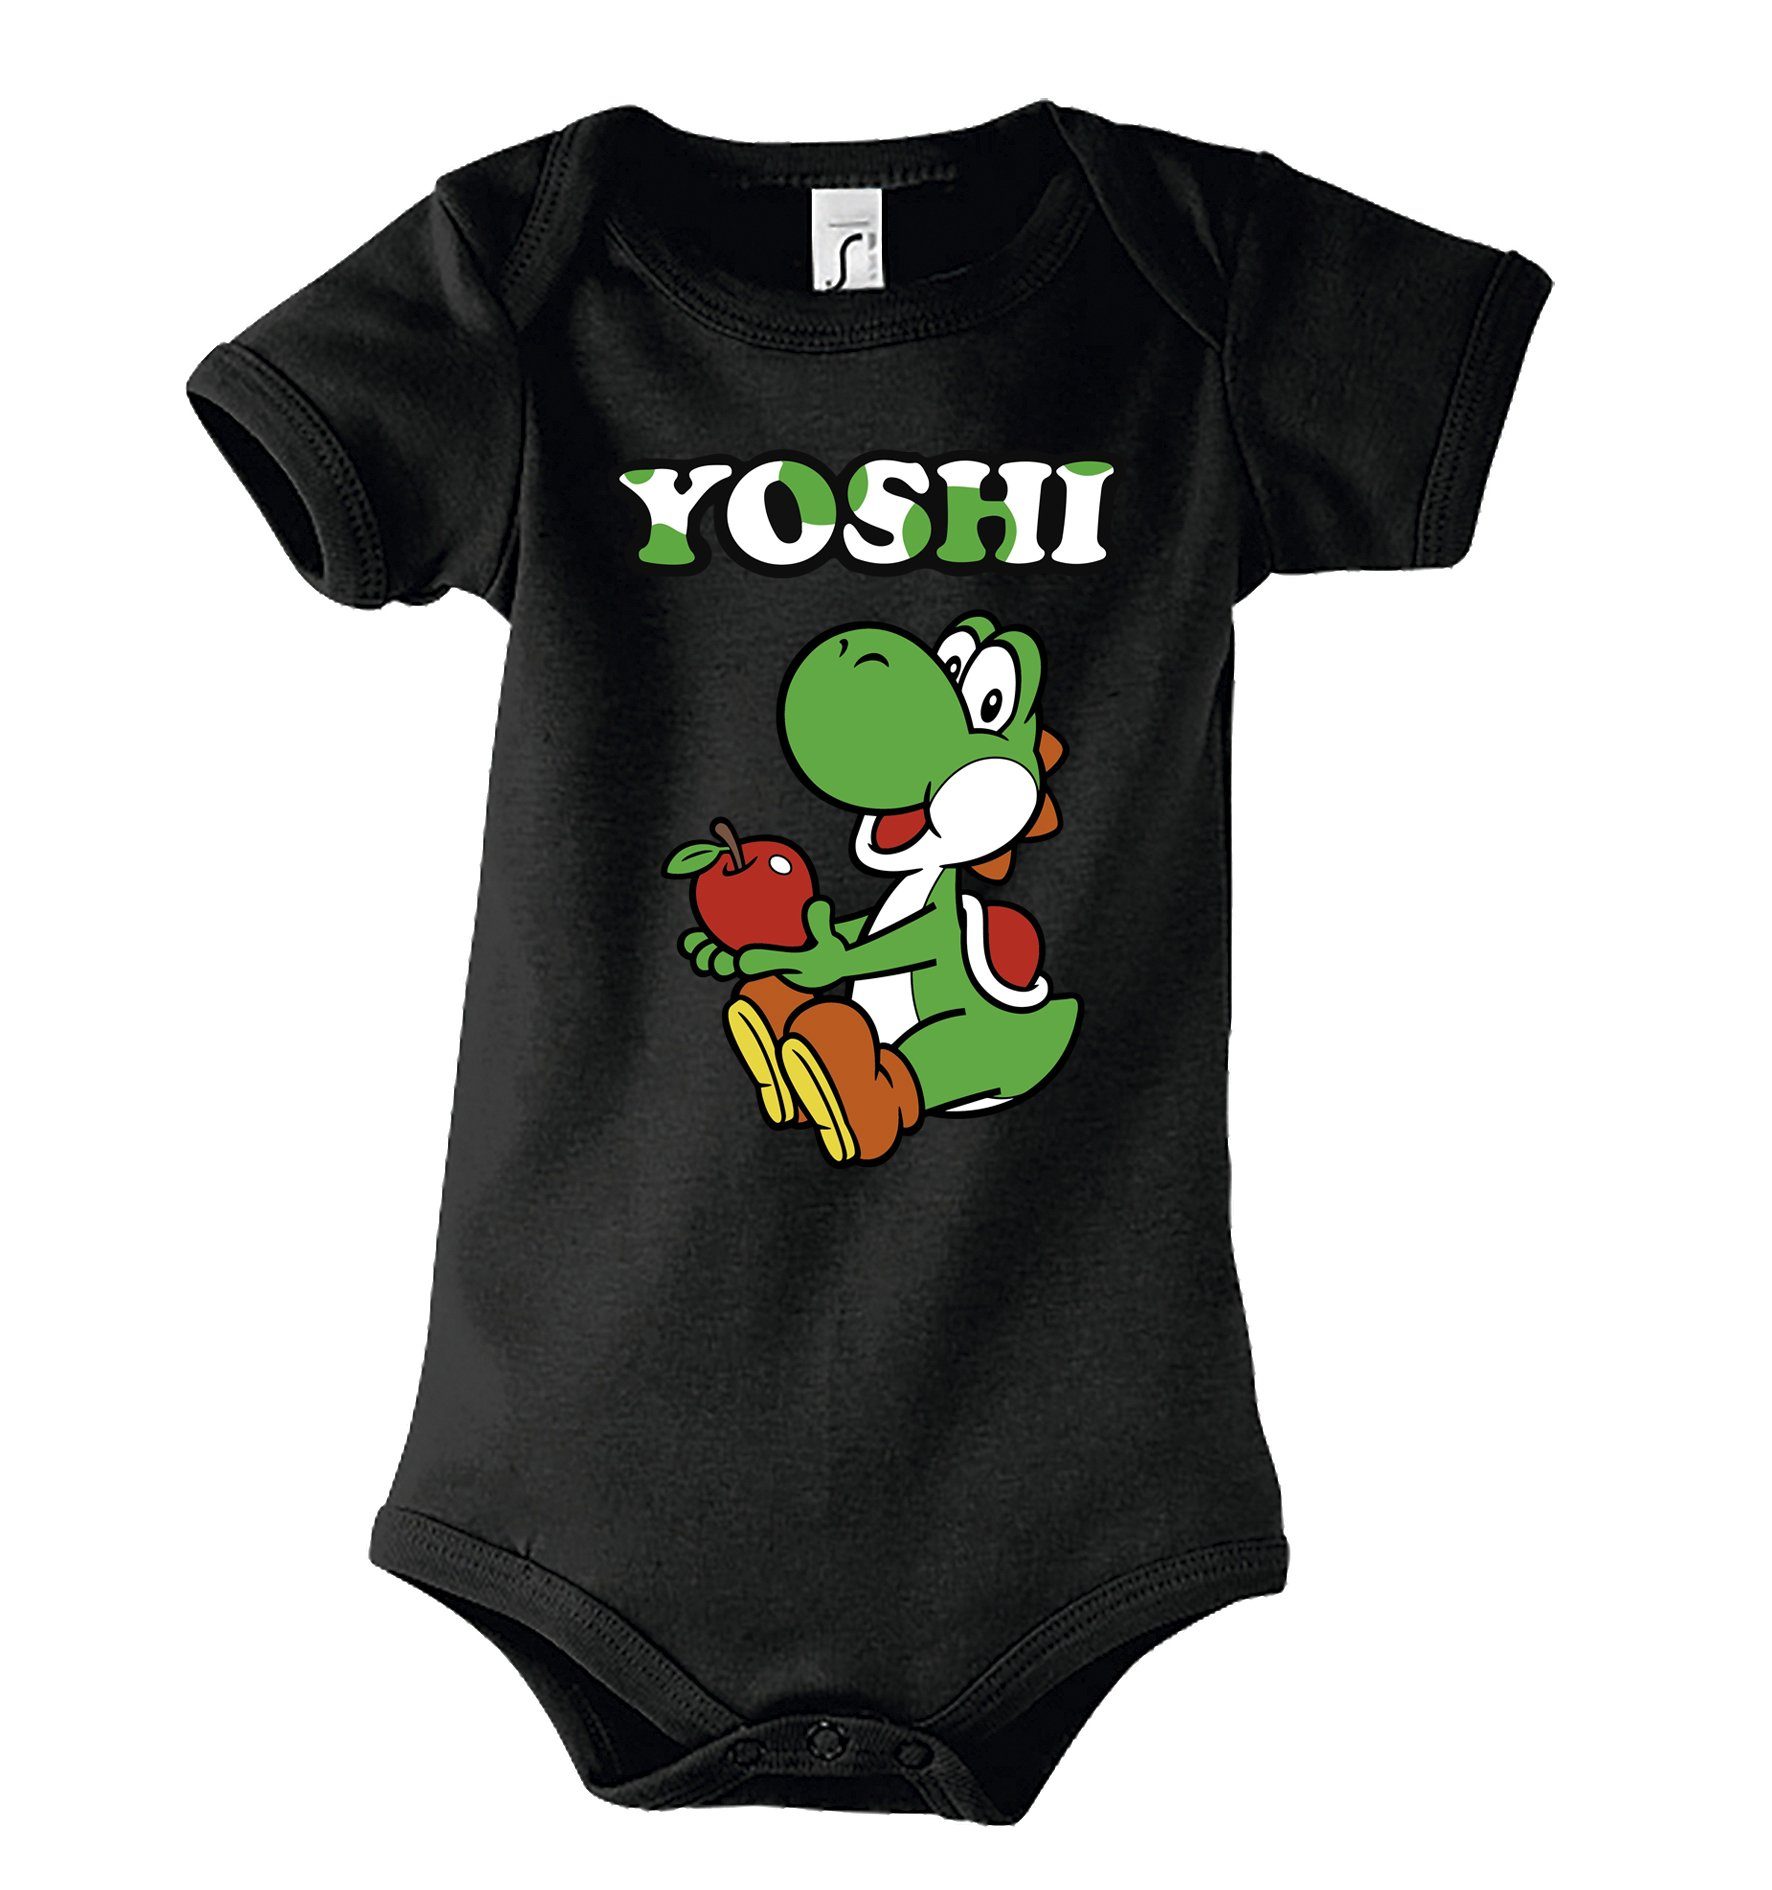 Youth Designz Kurzarmbody Baby Body Strampler Yoshi mit niedlichem Frontprint Schwarz